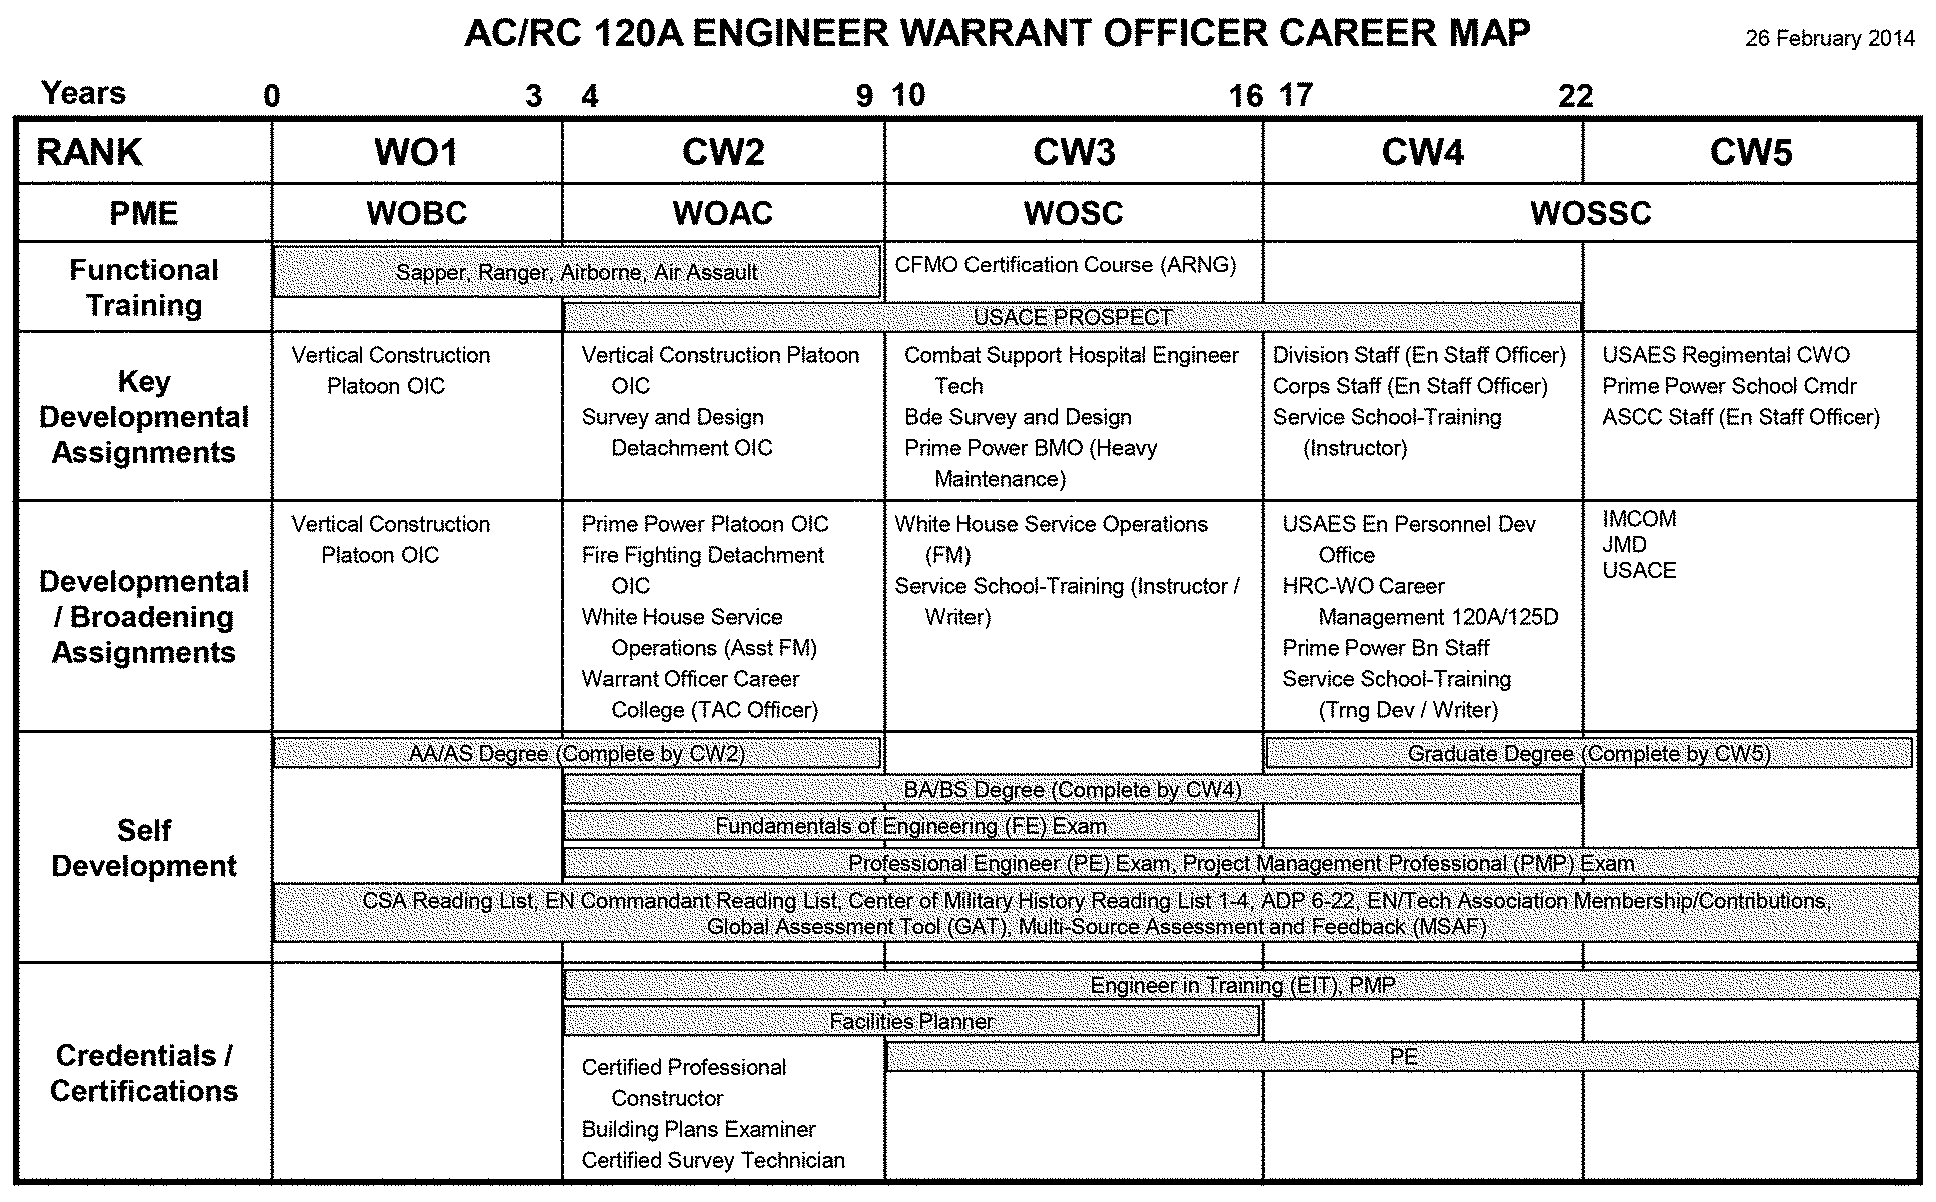 Figure 1.1 120A Engineer WO Career Map